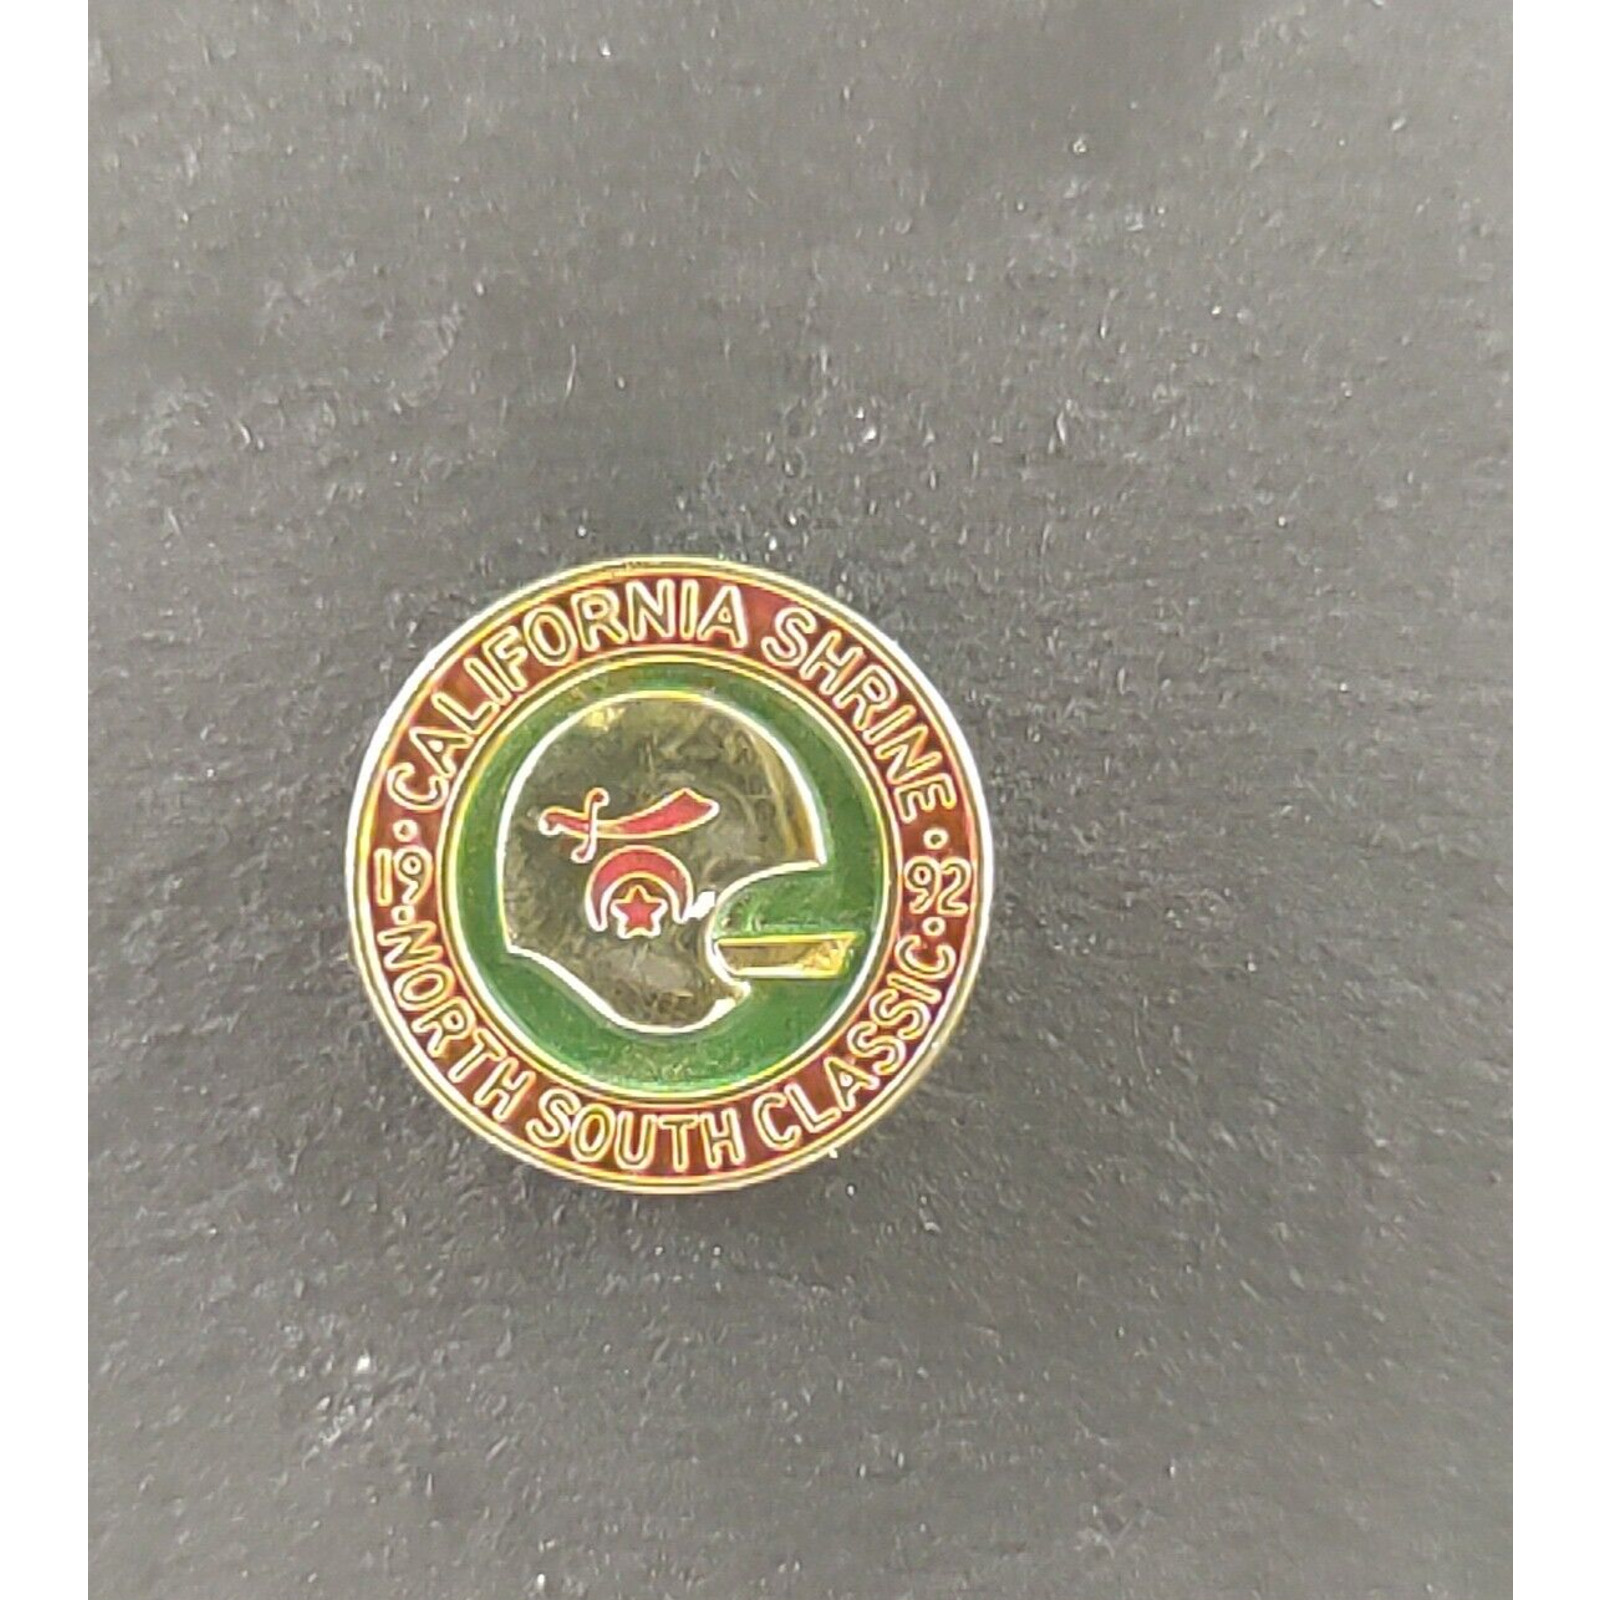 North South Classic California Shrine Football 1992 Hat Lapel Pinback Pin